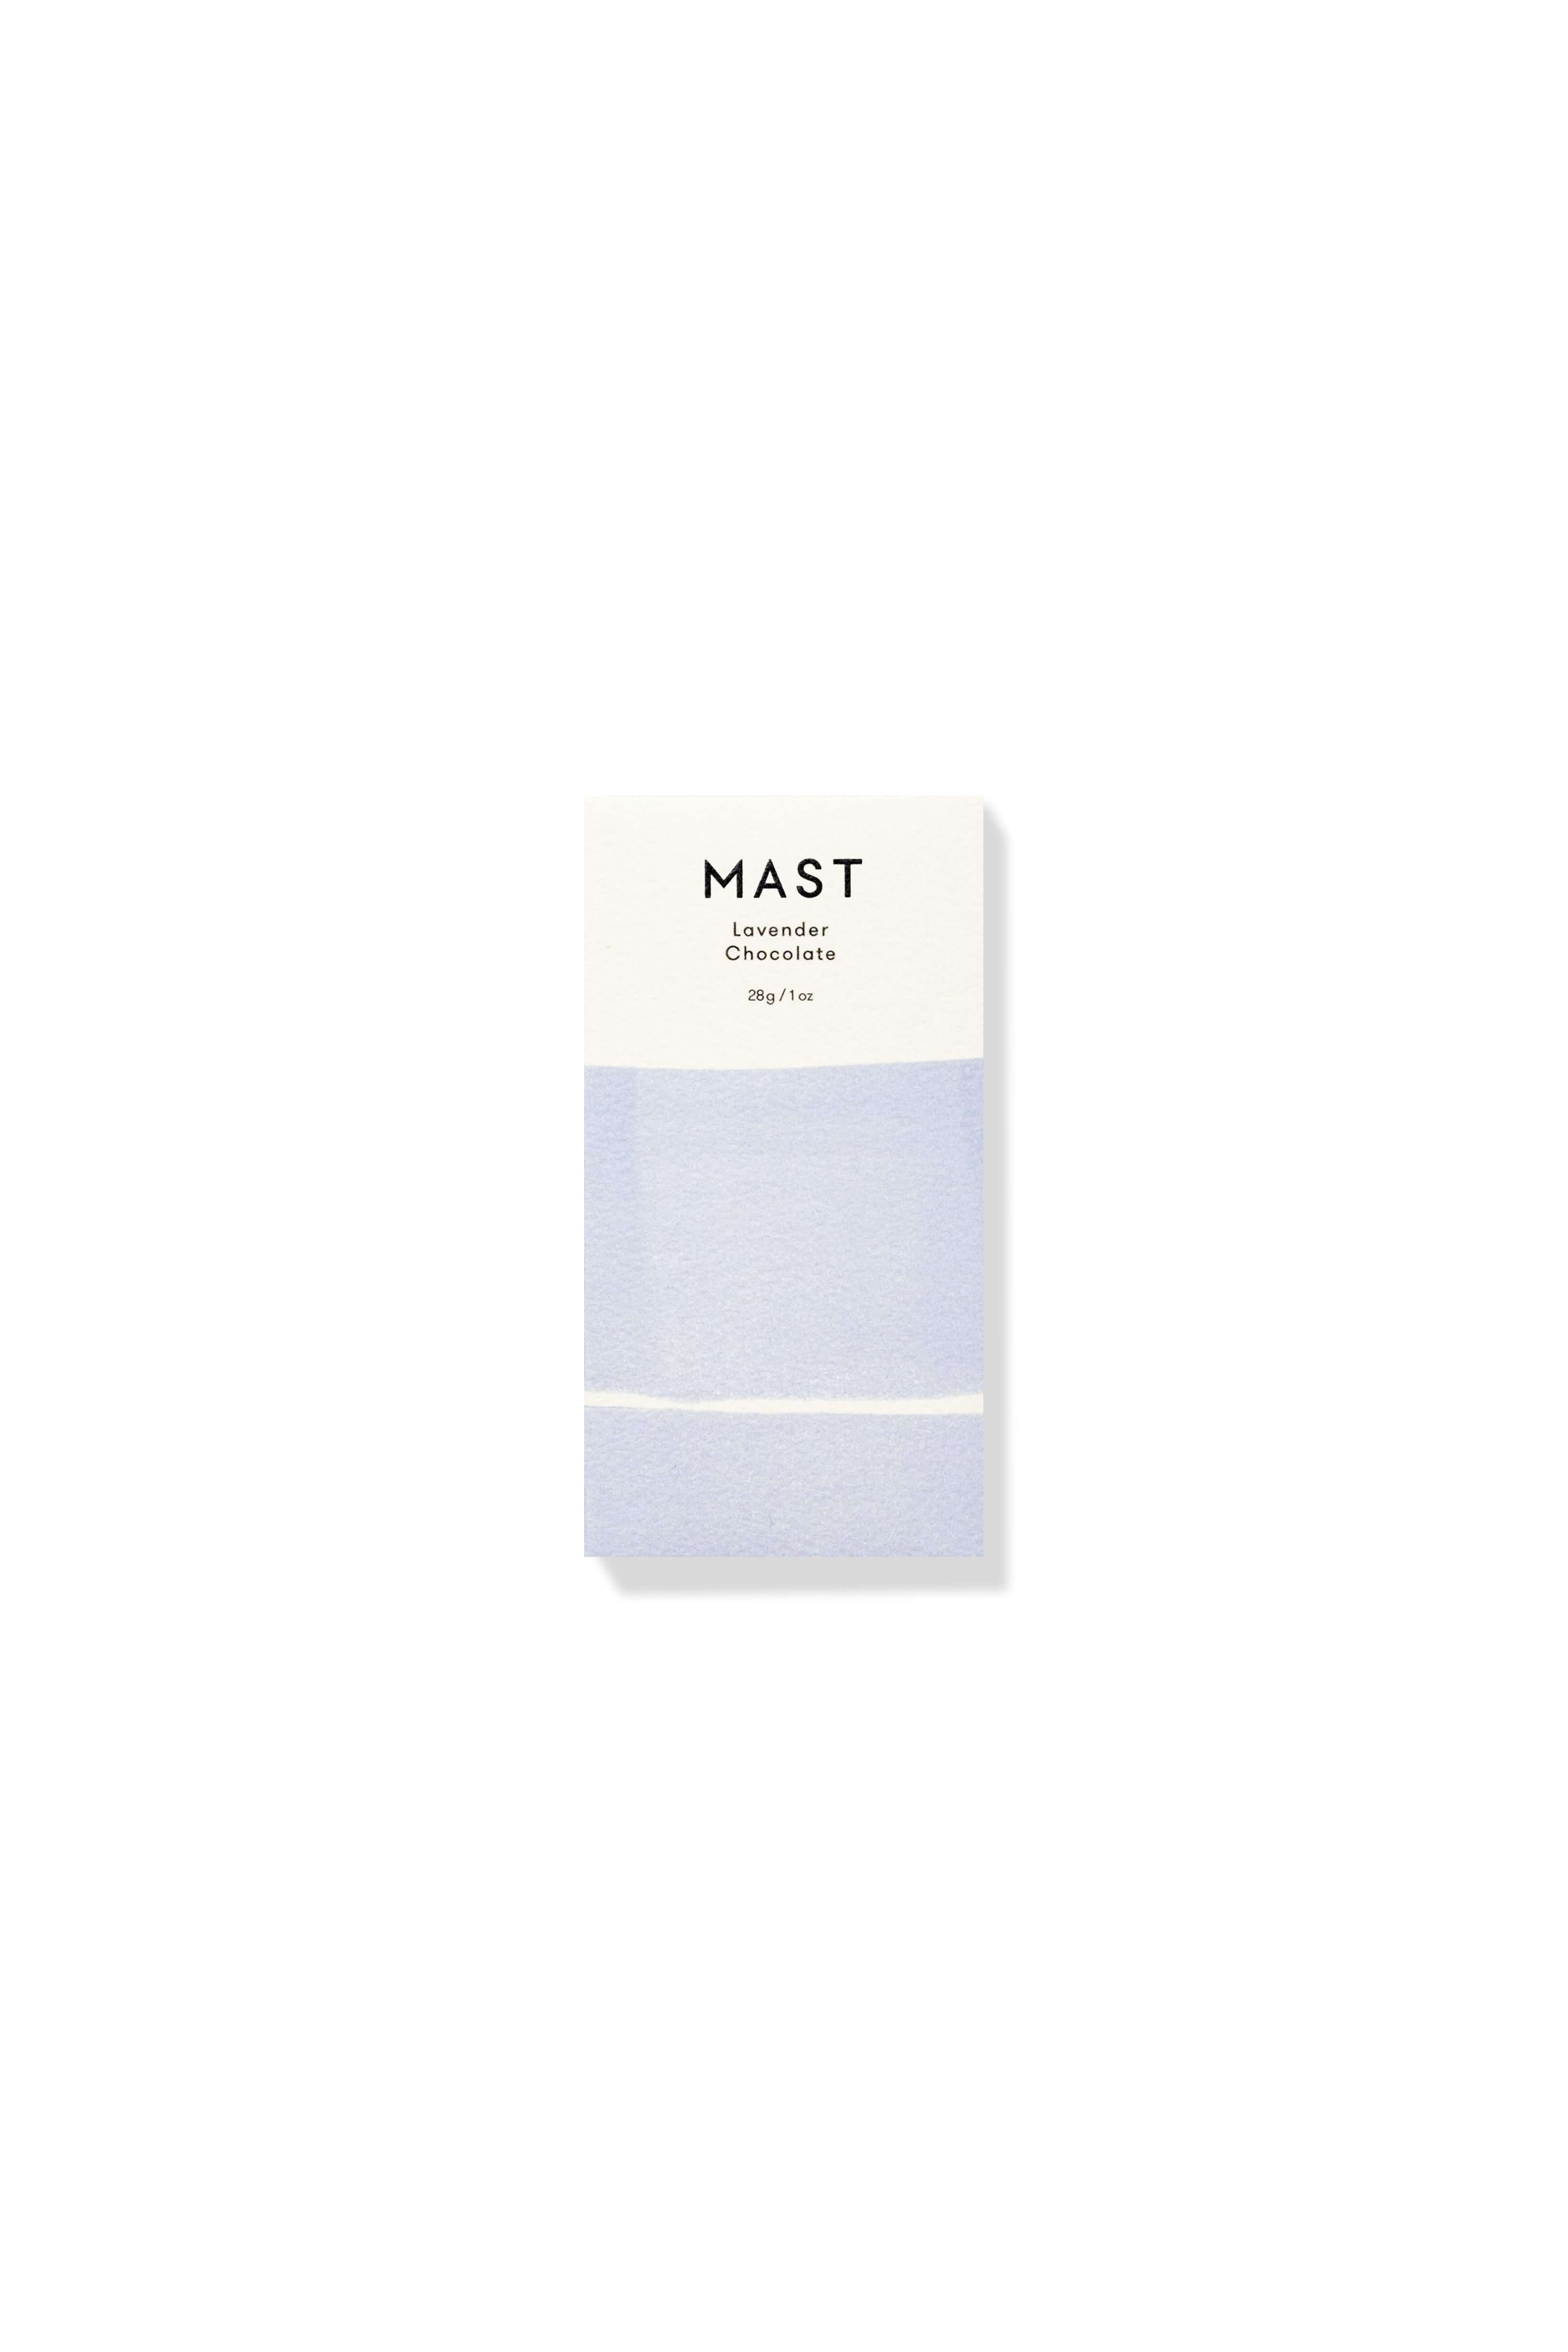 Mast - Lavender Chocolate - Mini (28g / 1oz)